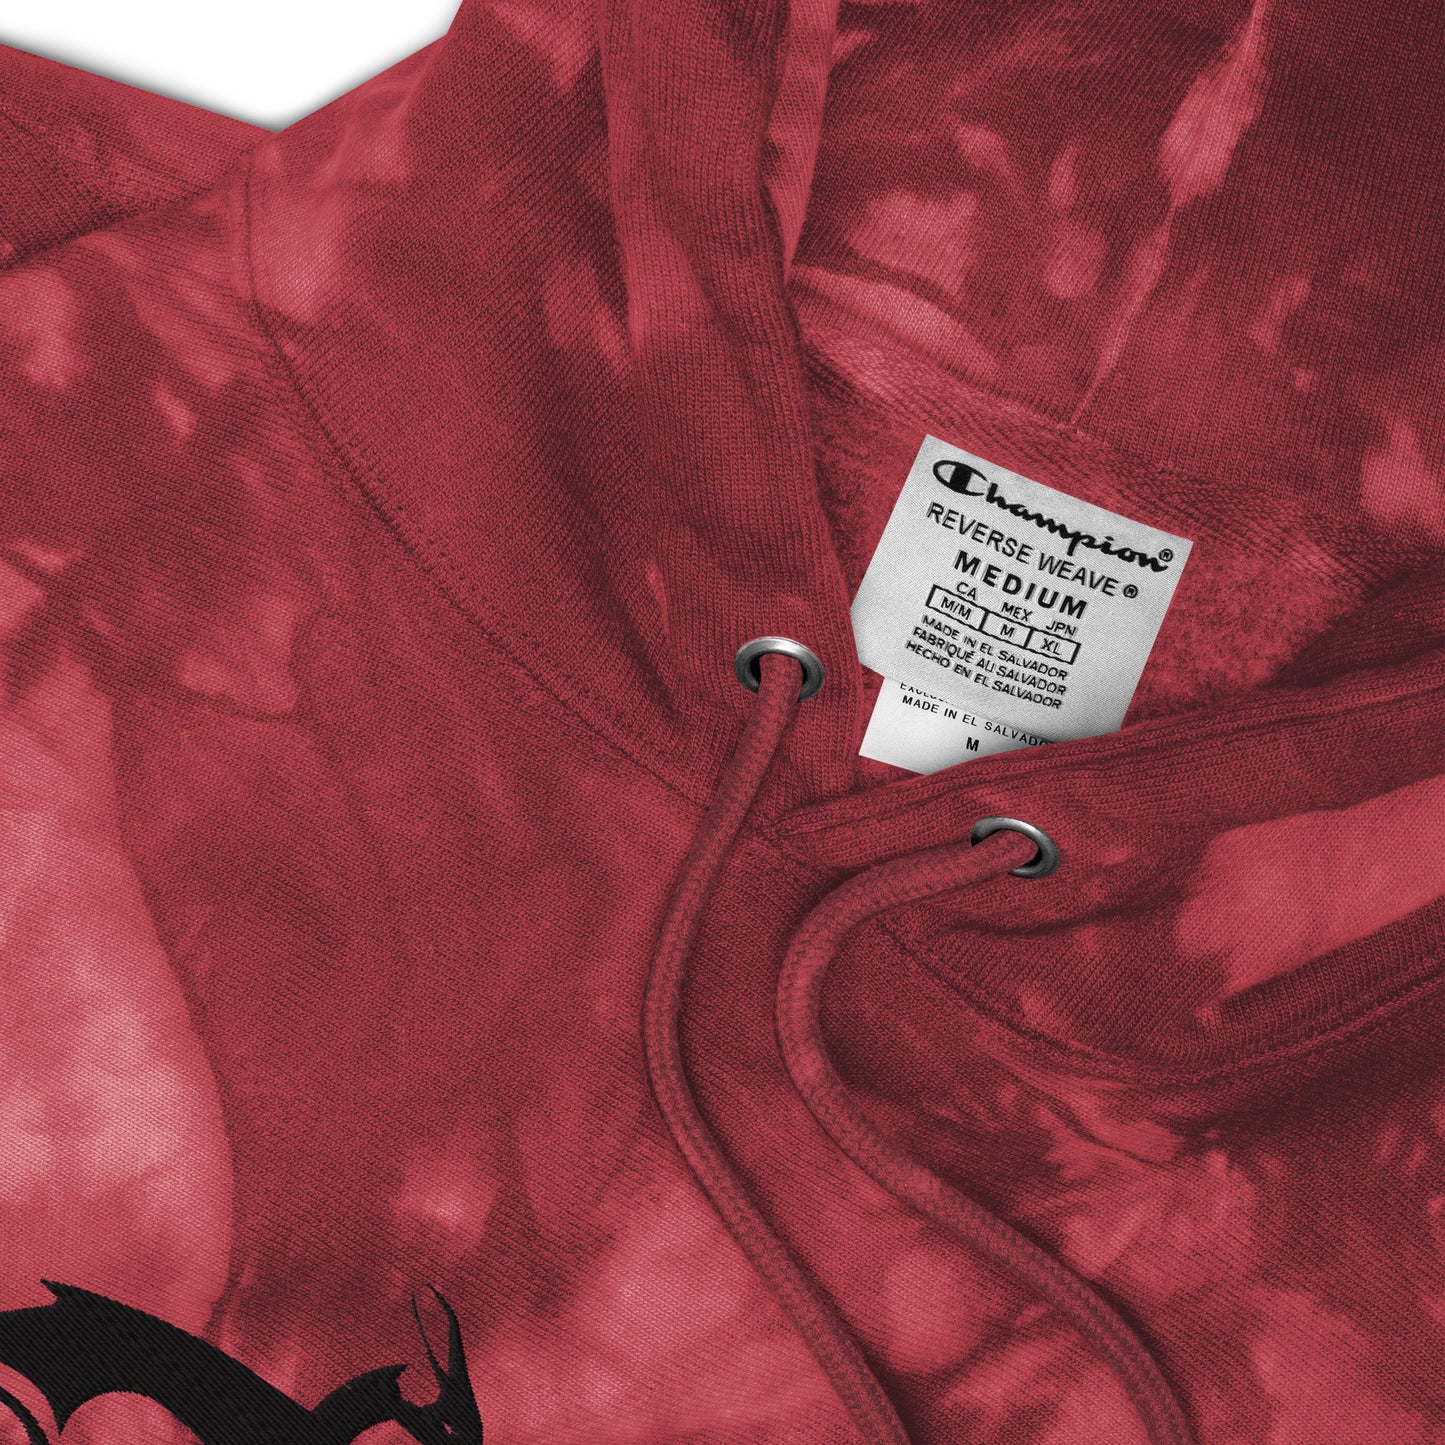 Fire Drake Artistry™ Unisex Champion tie-dye hoodie for FireDrake Artistry